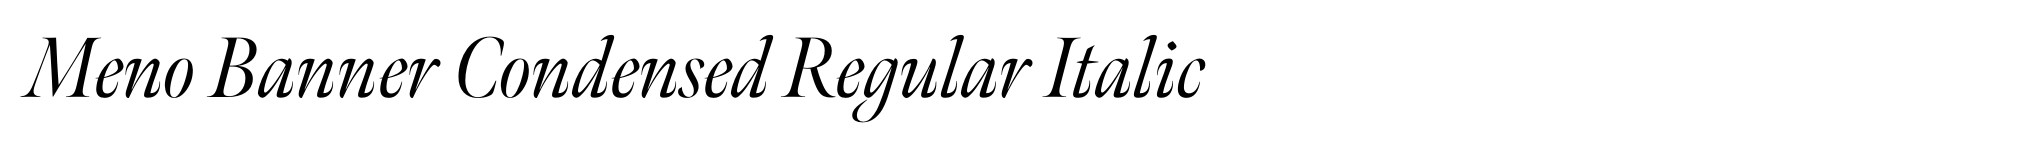 Meno Banner Condensed Regular Italic image